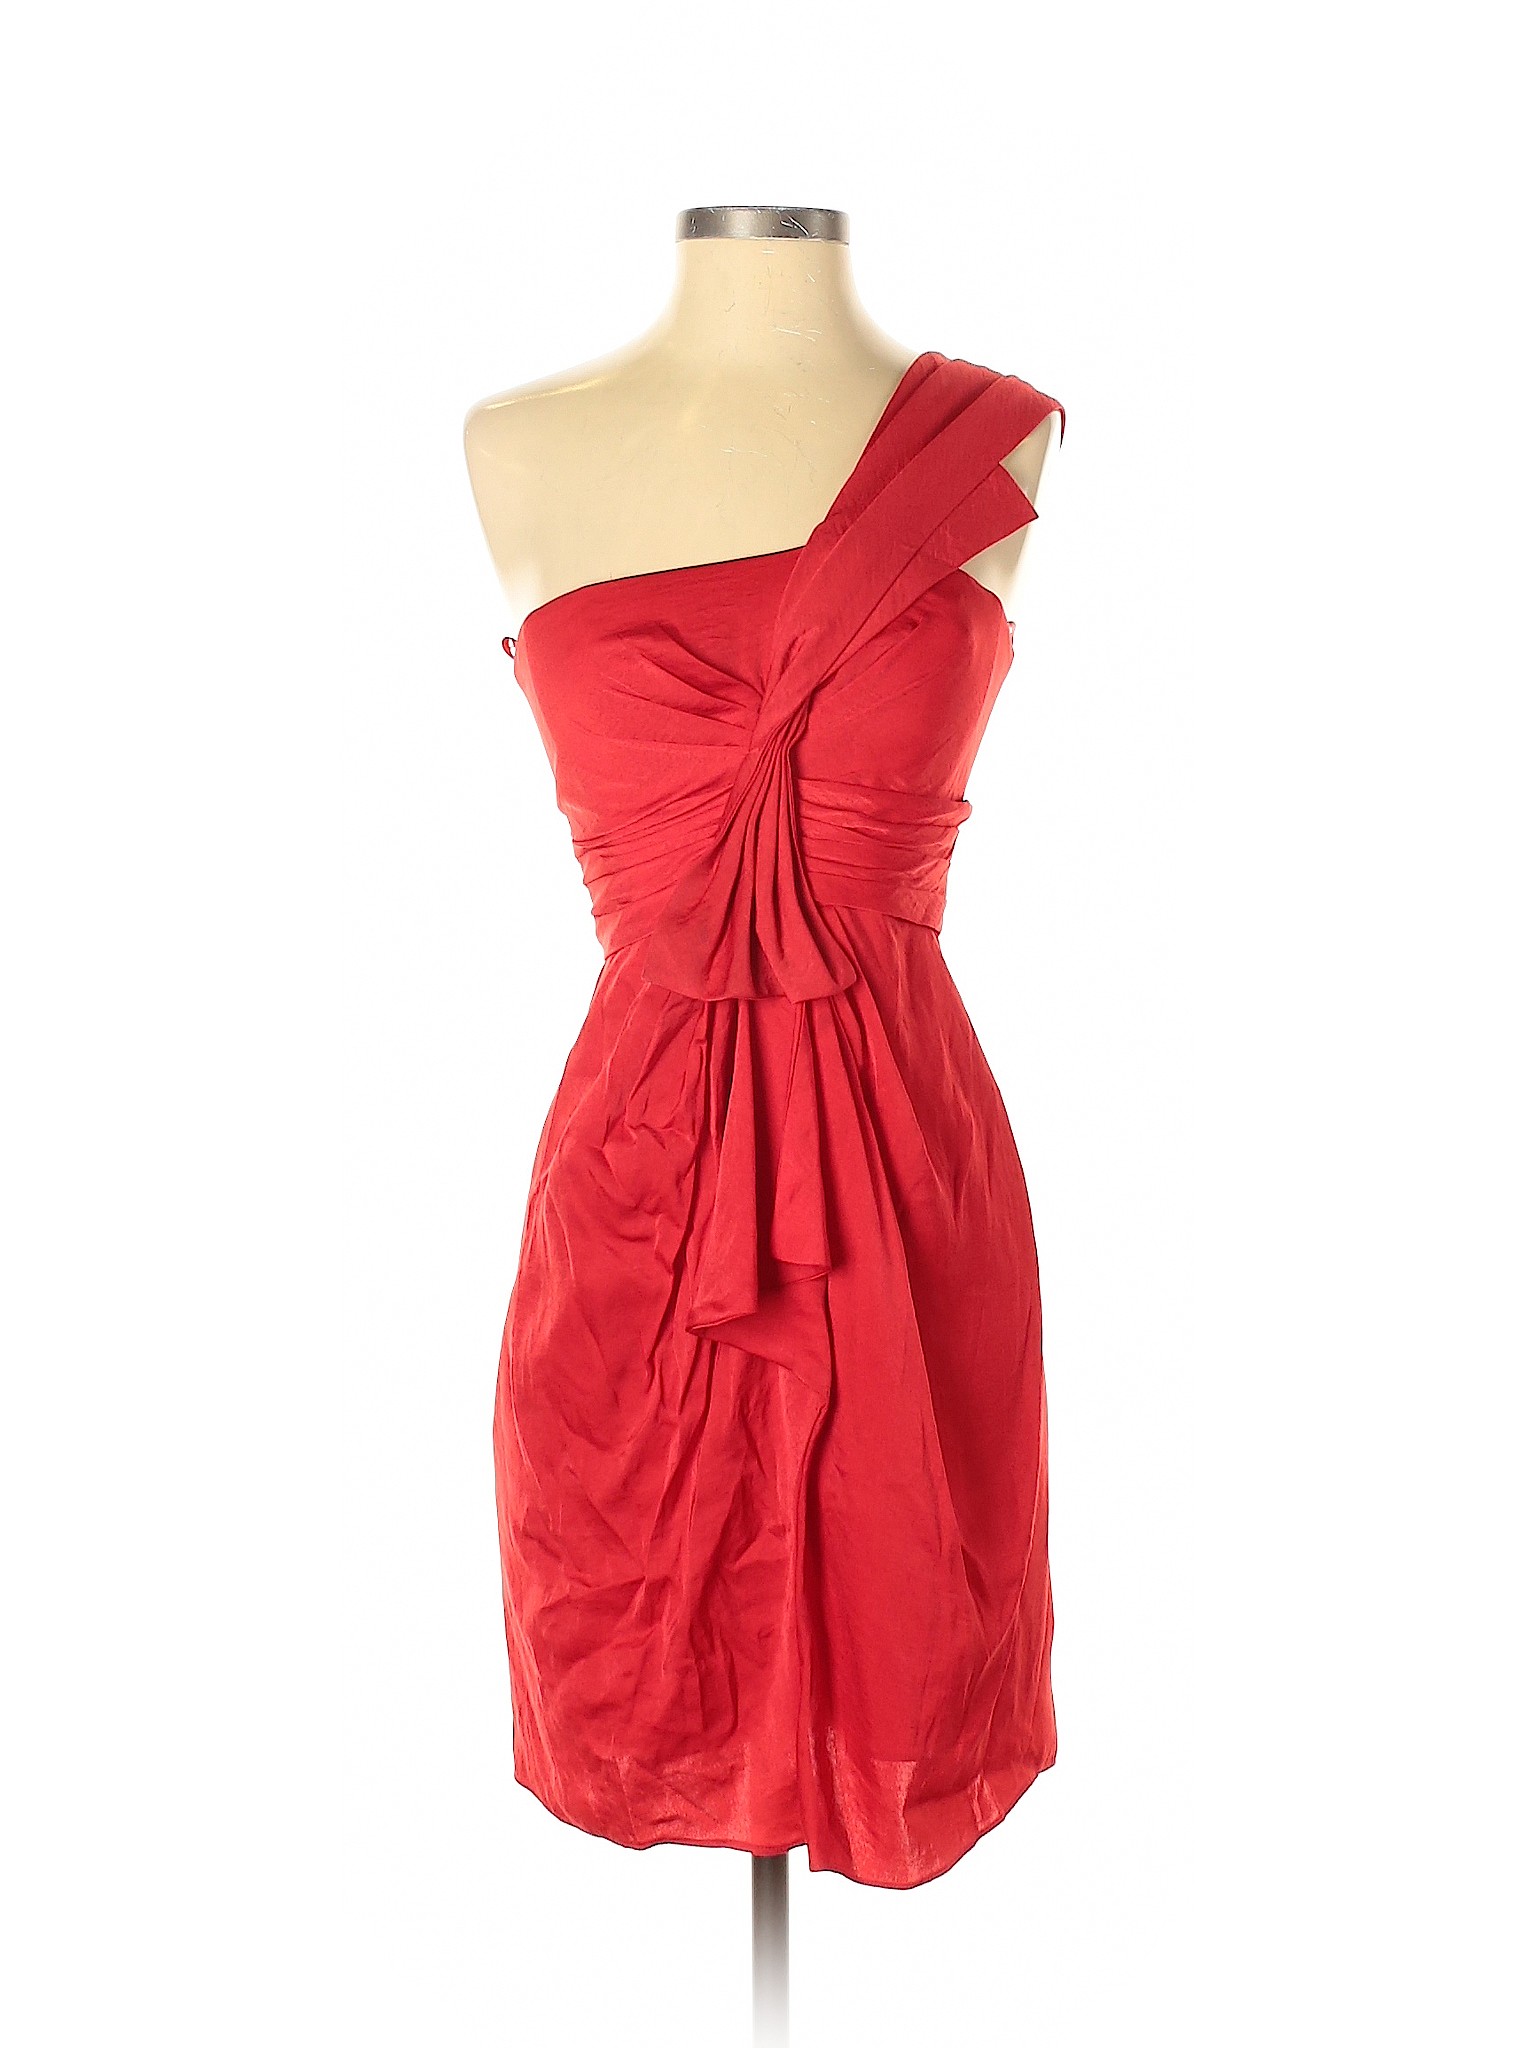 BCBGMAXAZRIA Women Red Cocktail Dress 2 | eBay